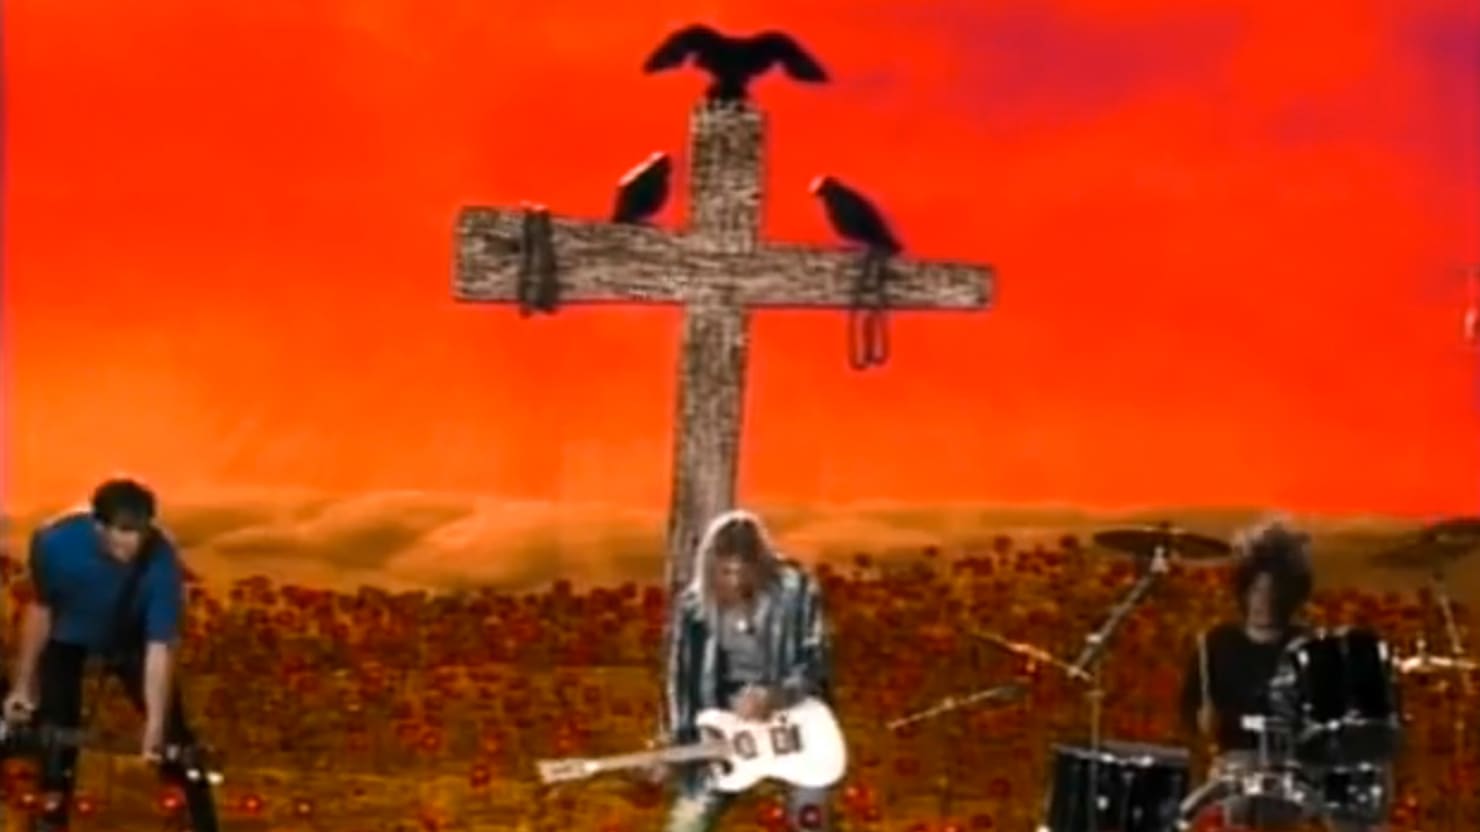 Kurt Cobain's blue hair in the "Heart-Shaped Box" music video - wide 8